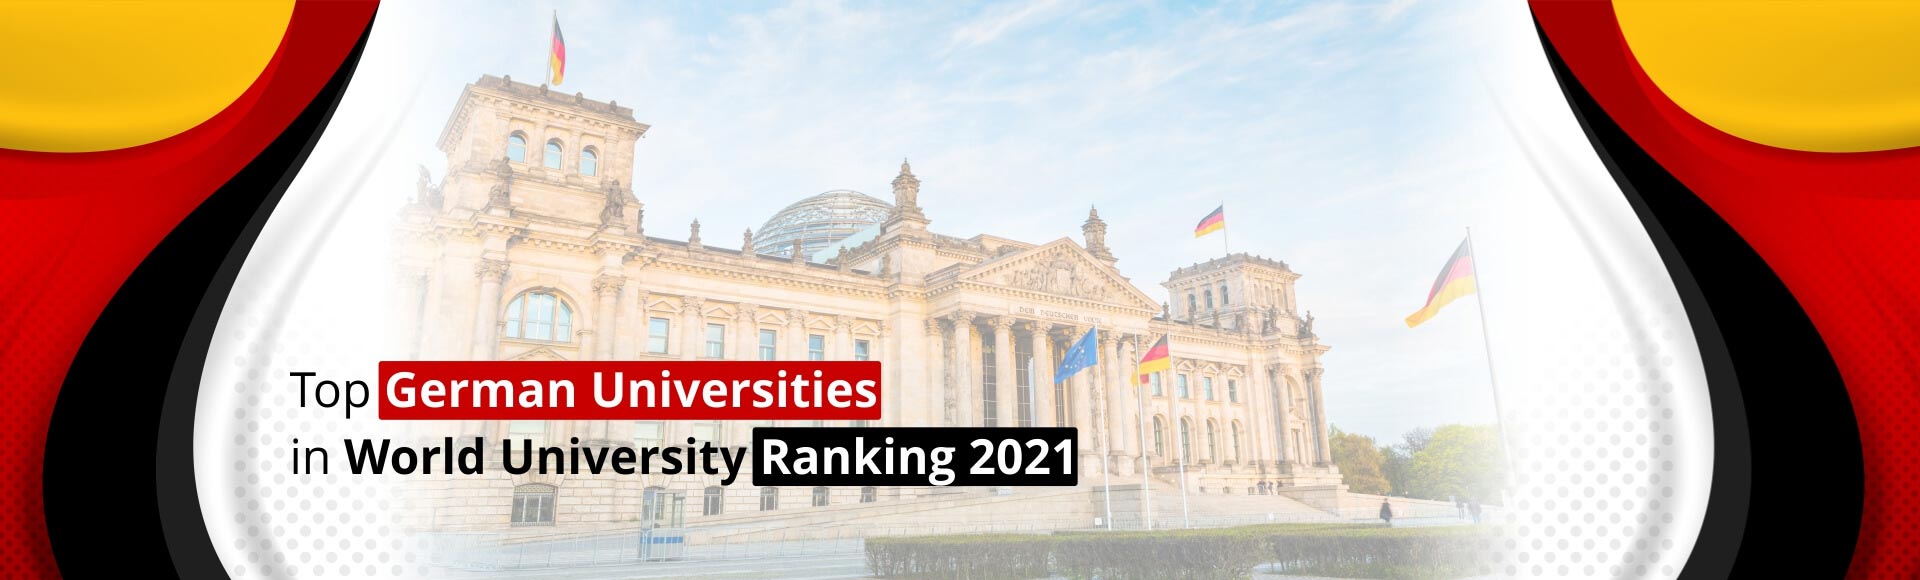 Top German Universities in World University Ranking 2021